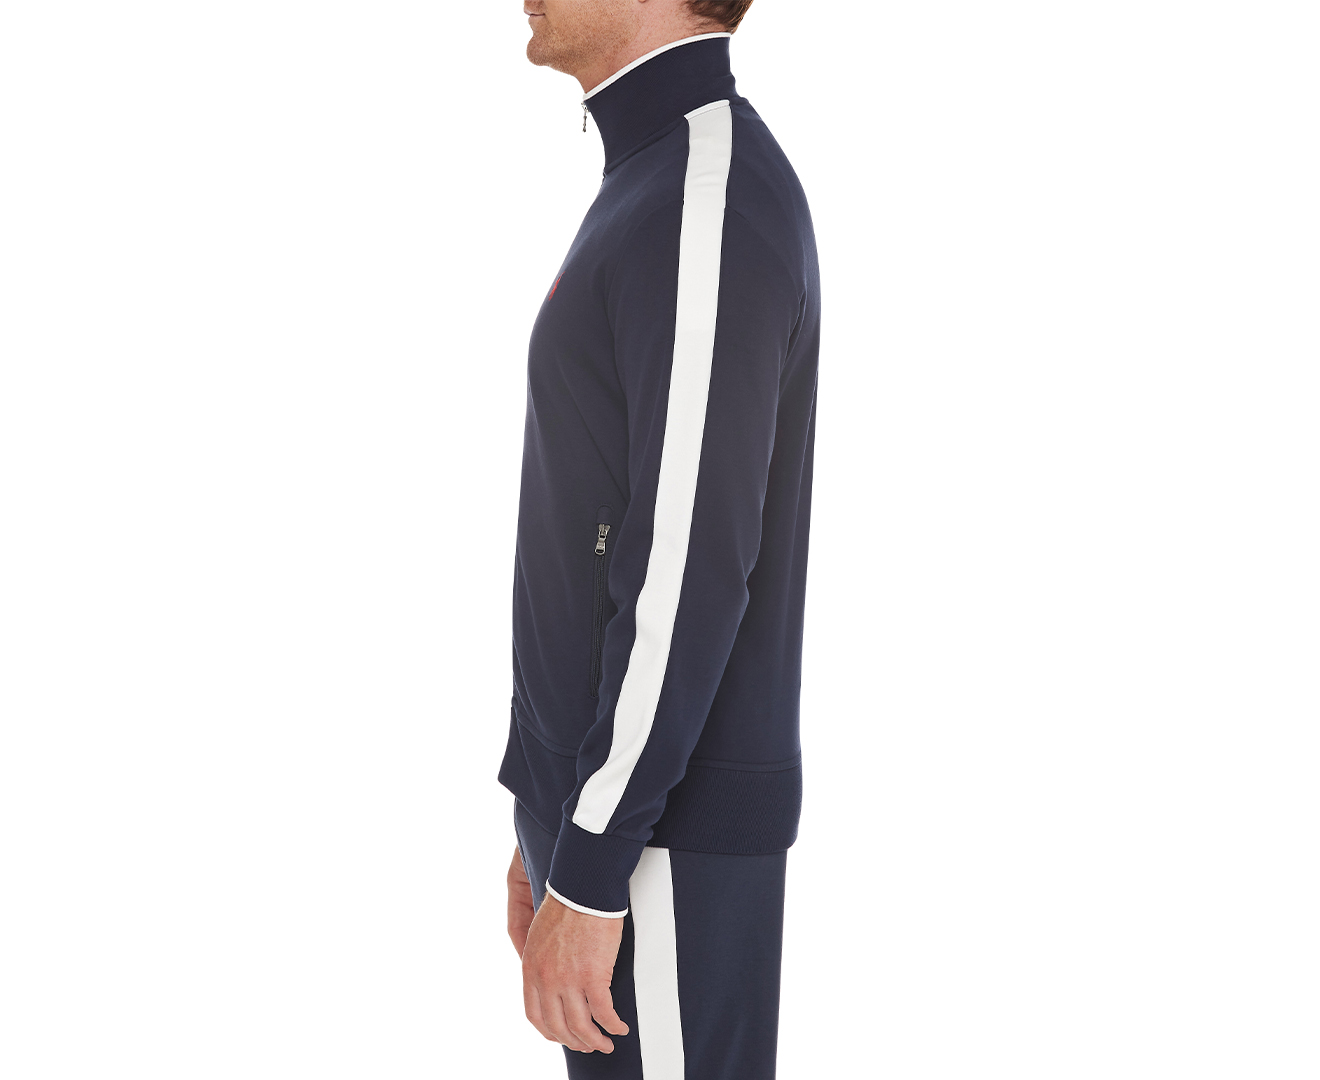 Polo Ralph Lauren Contrast Tip Lightweight Track Jacket